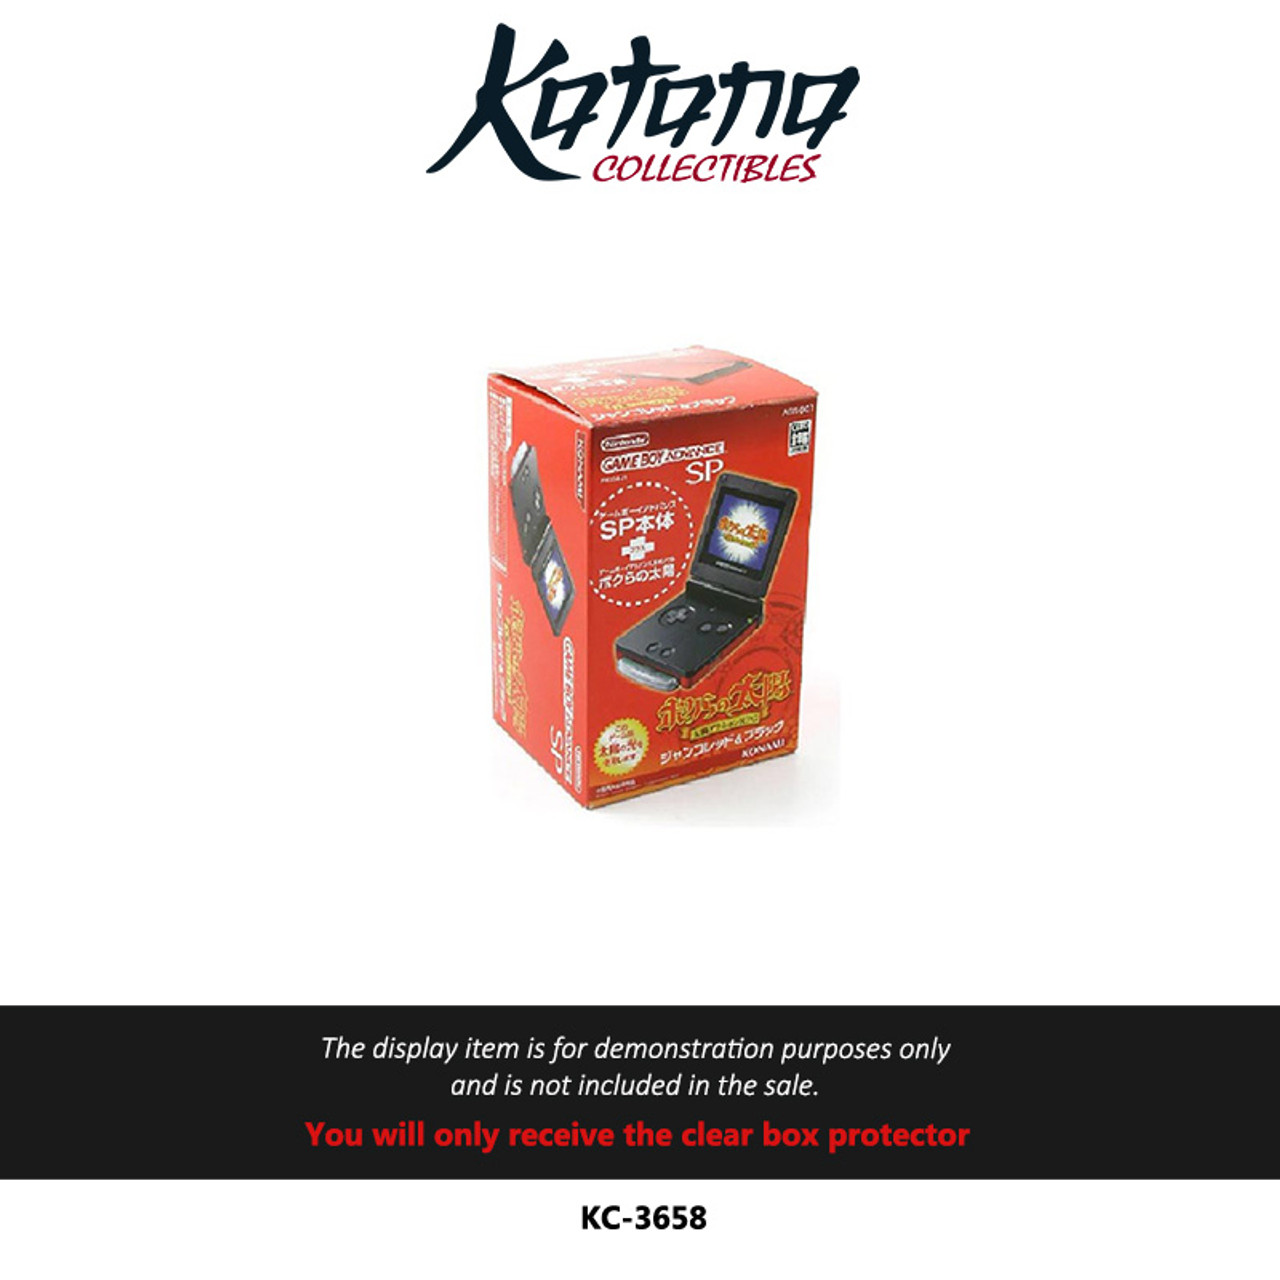 Katana Collectibles Protector For Gameboy advance SP special edition box